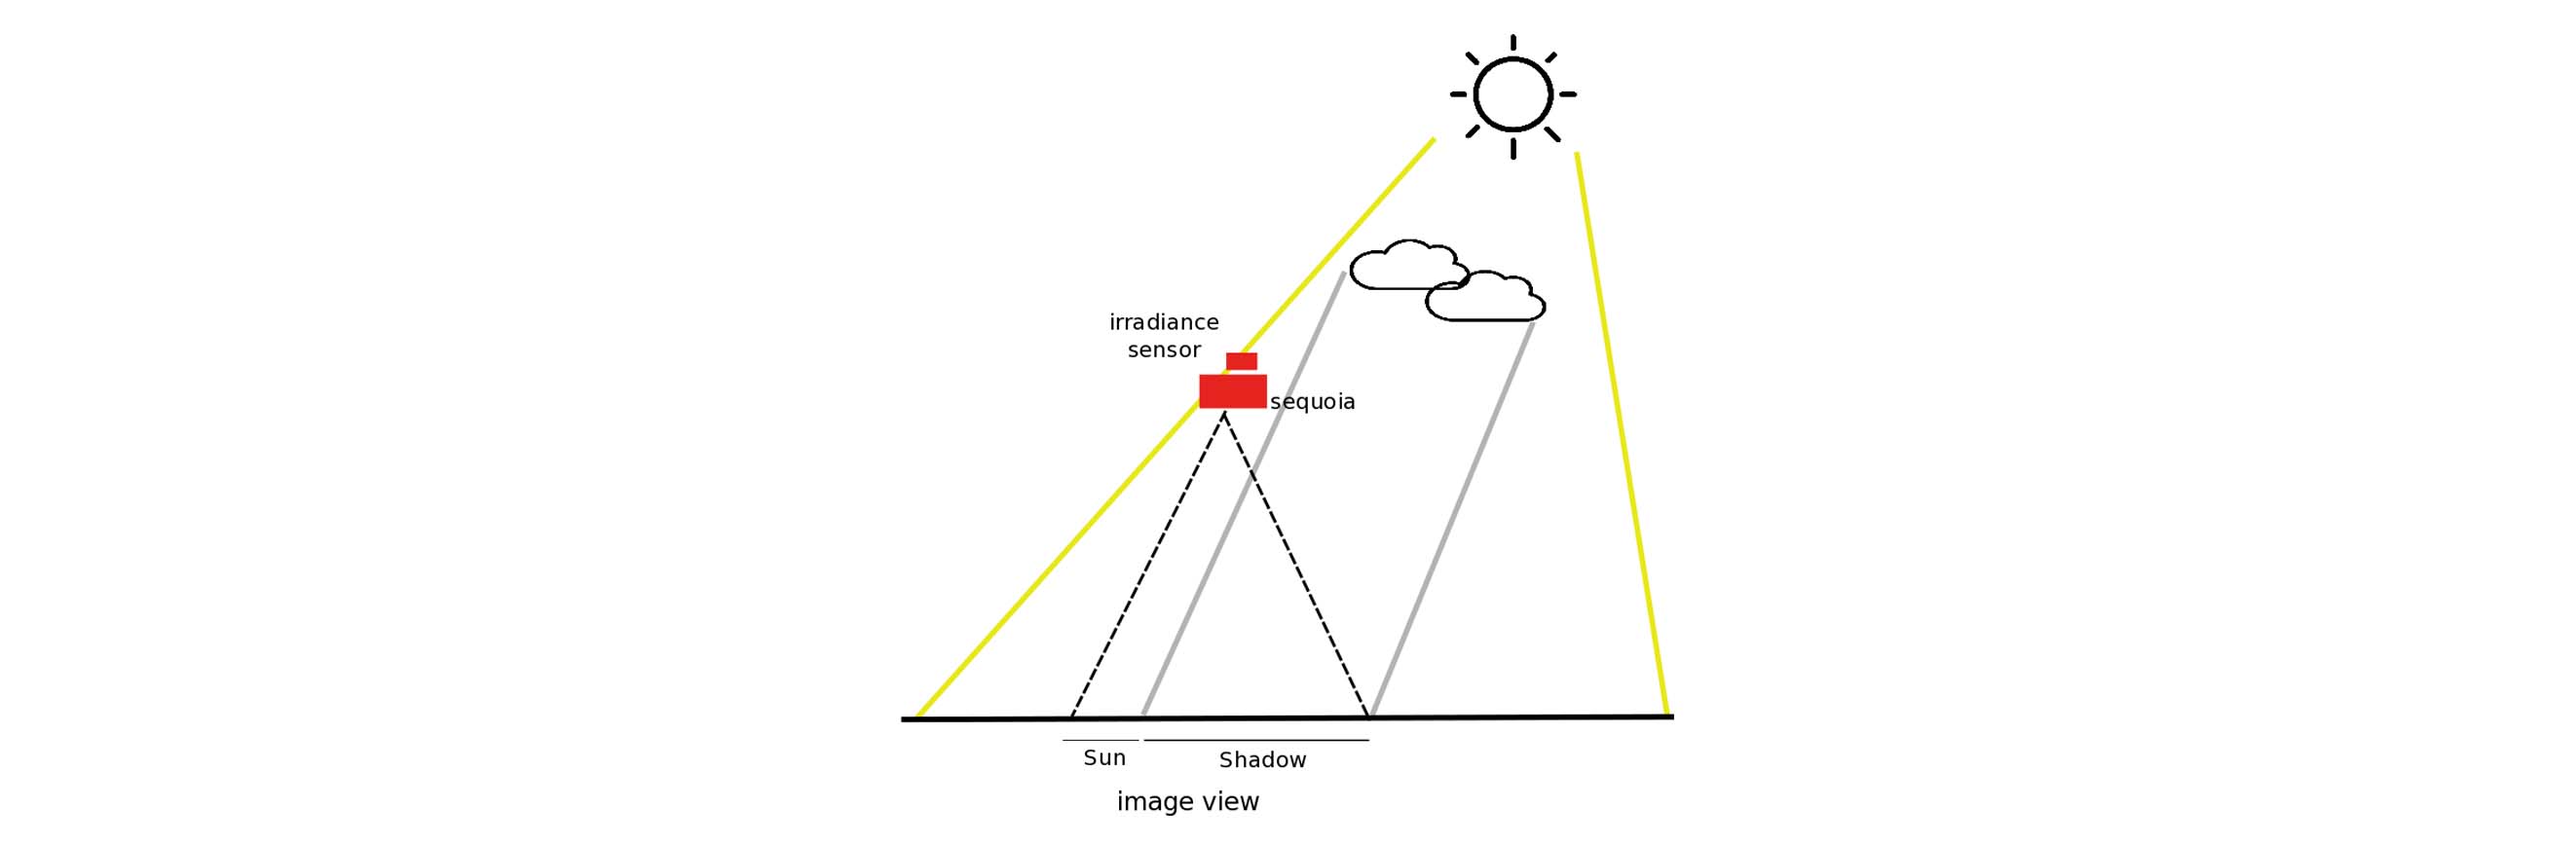 Diagram of the irradiance sensor